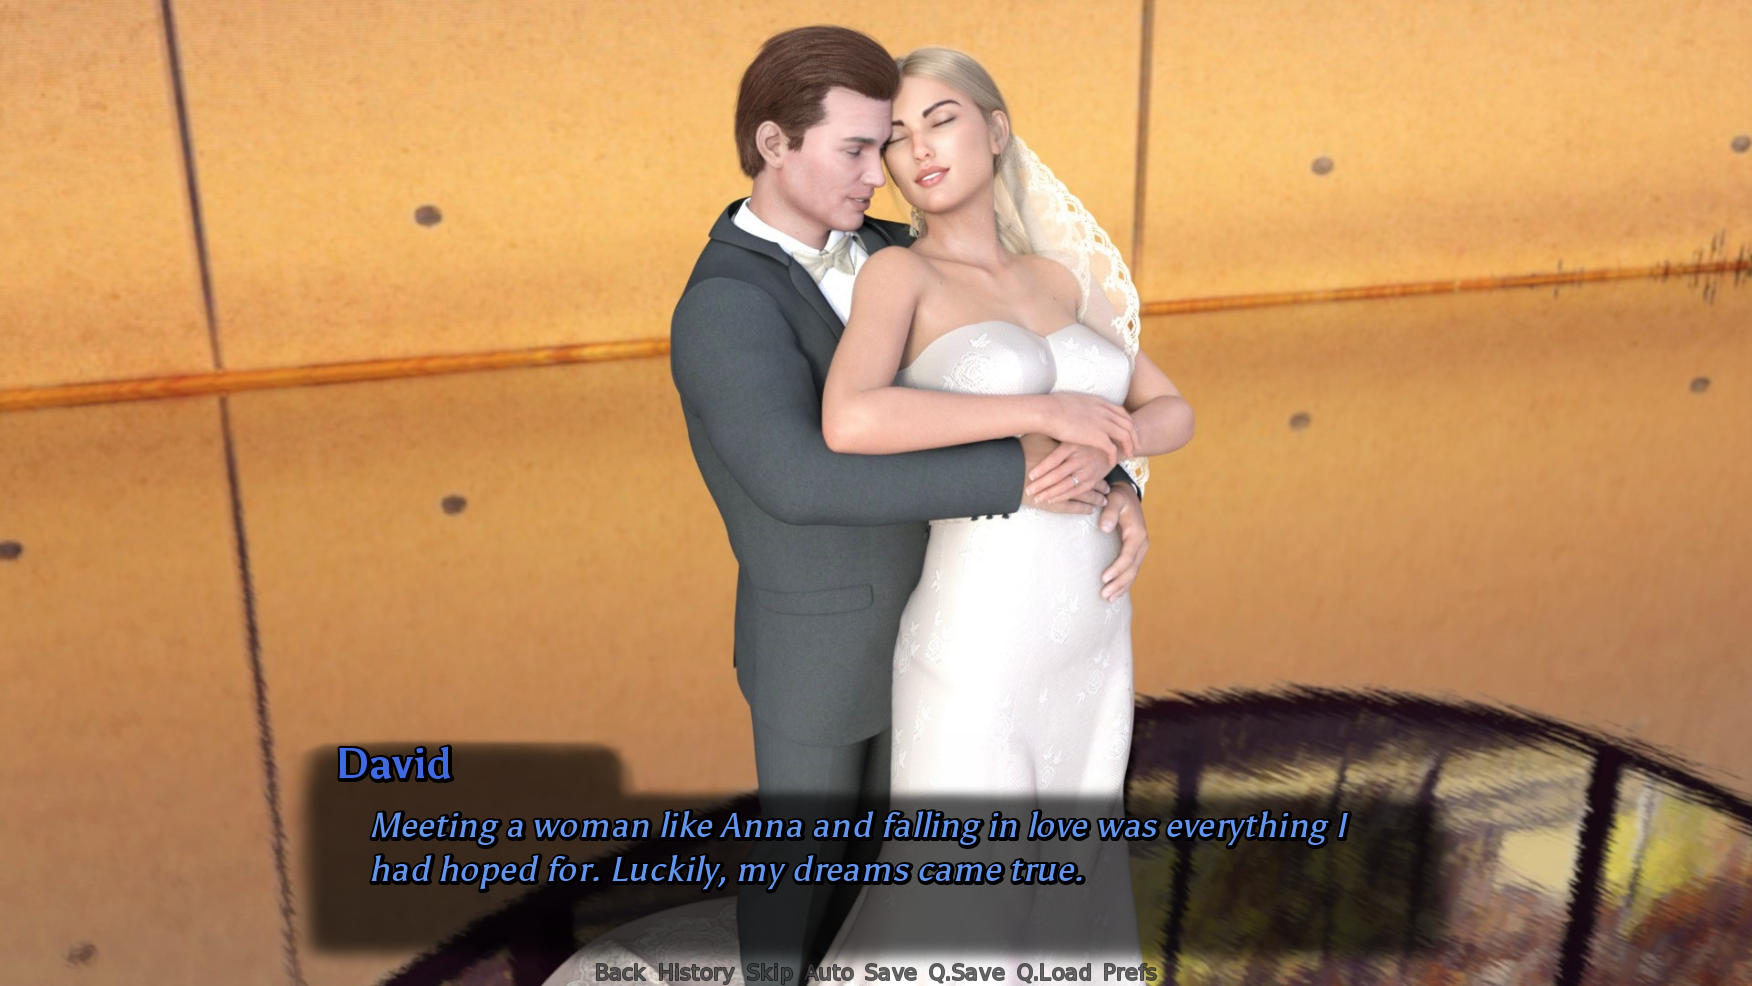 Wedin Sex Dowunlod - A Perfect Marriage v1.0 - free game download, reviews, mega - xGames